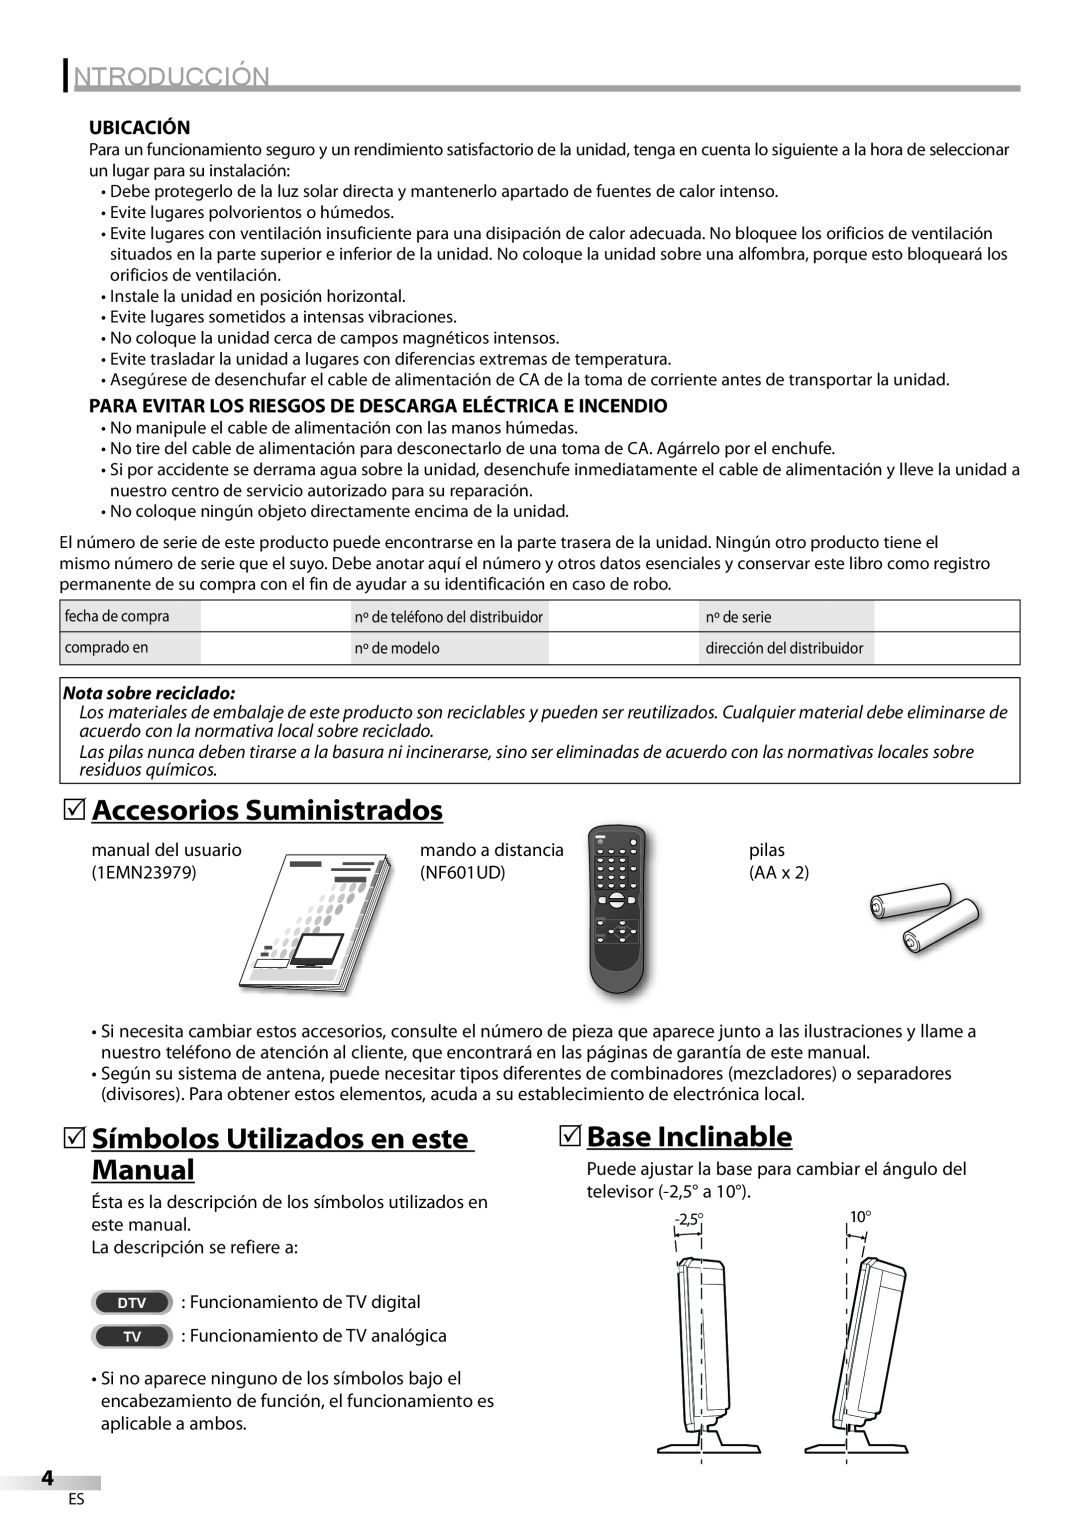 Sylvania LC200SL9 A 5Accesorios Suministrados, 5Símbolos Utilizados en este Manual, 5Base Inclinable, Introducción 